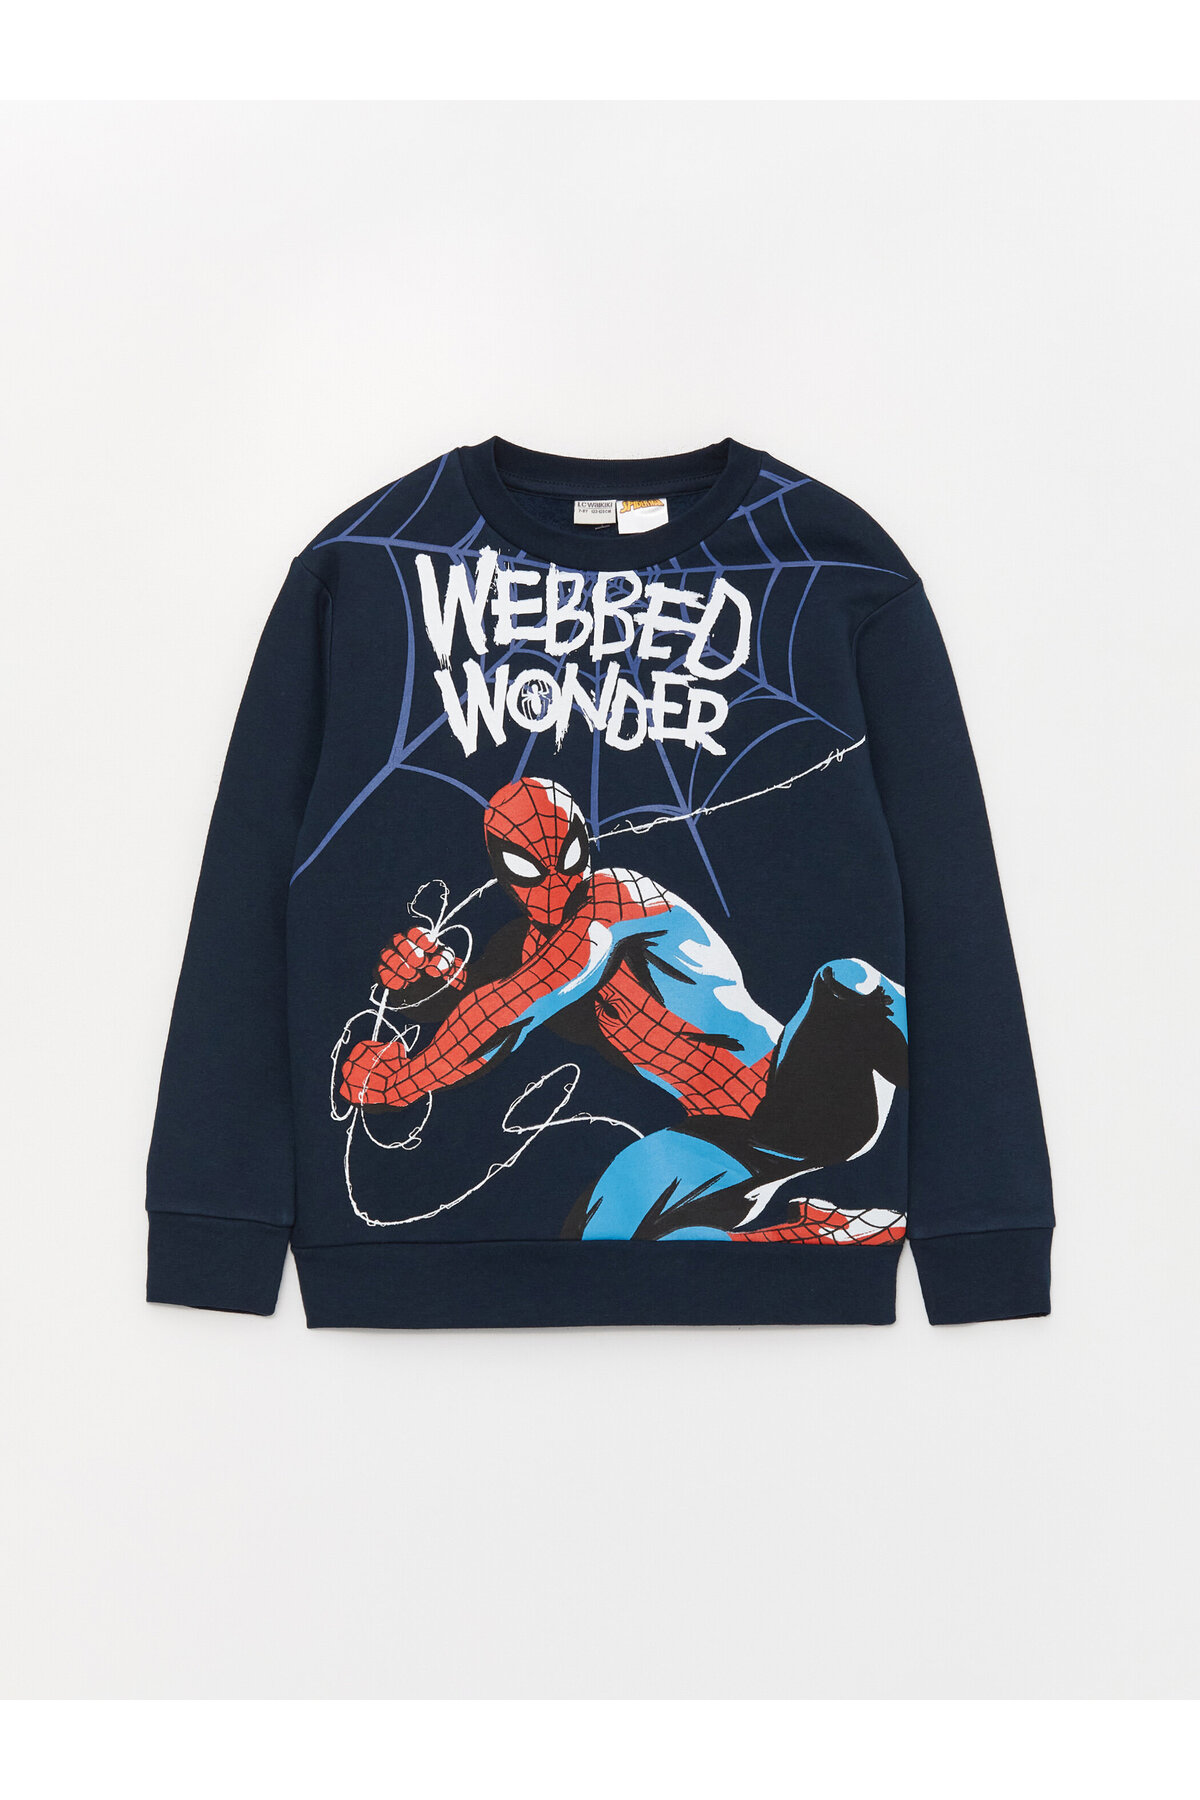 LC Waikiki Boys' Crew Neck Spiderman Printed Long Sleeve Sweatshirt